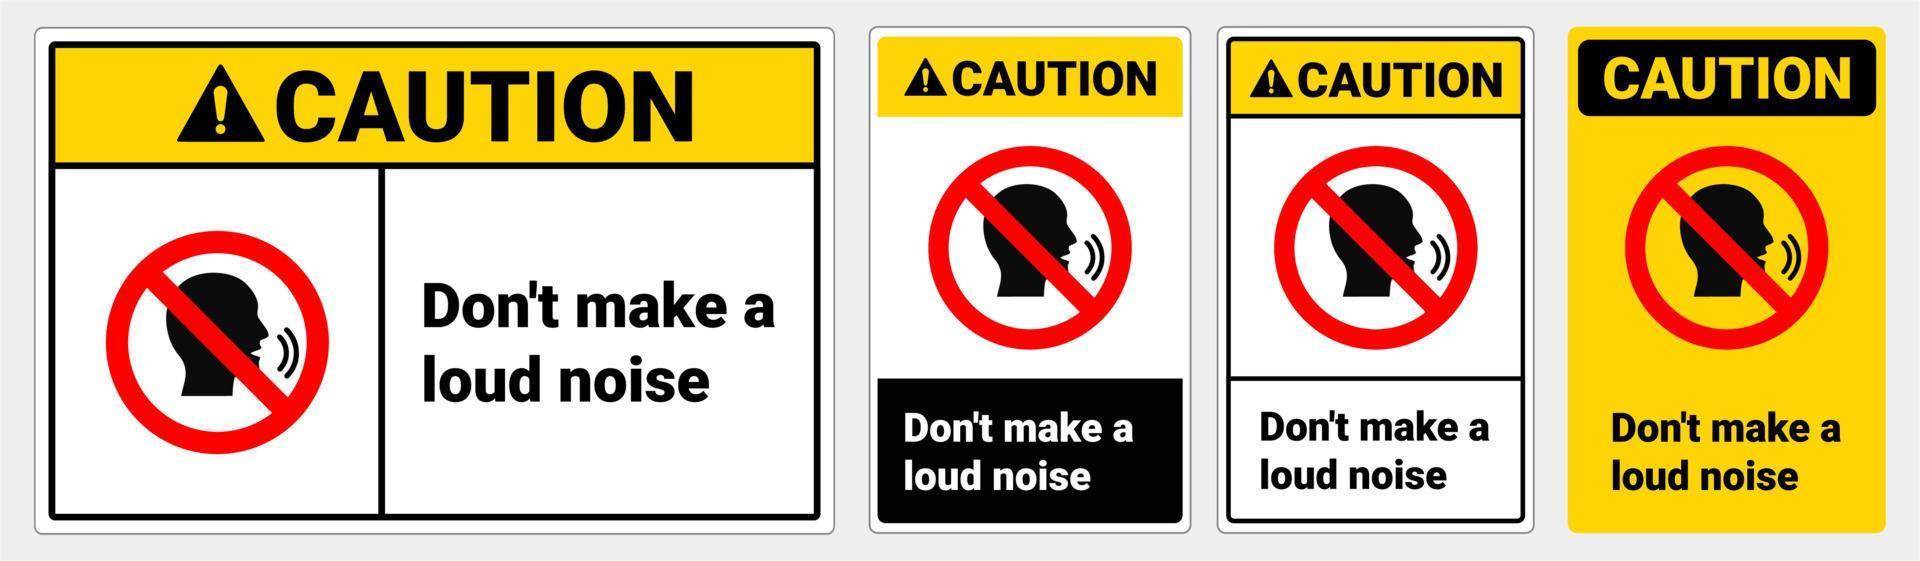 Safety sign Don't make a loud noice. Vector Illustration. OSHA and ANSI standard sign warning. eps10